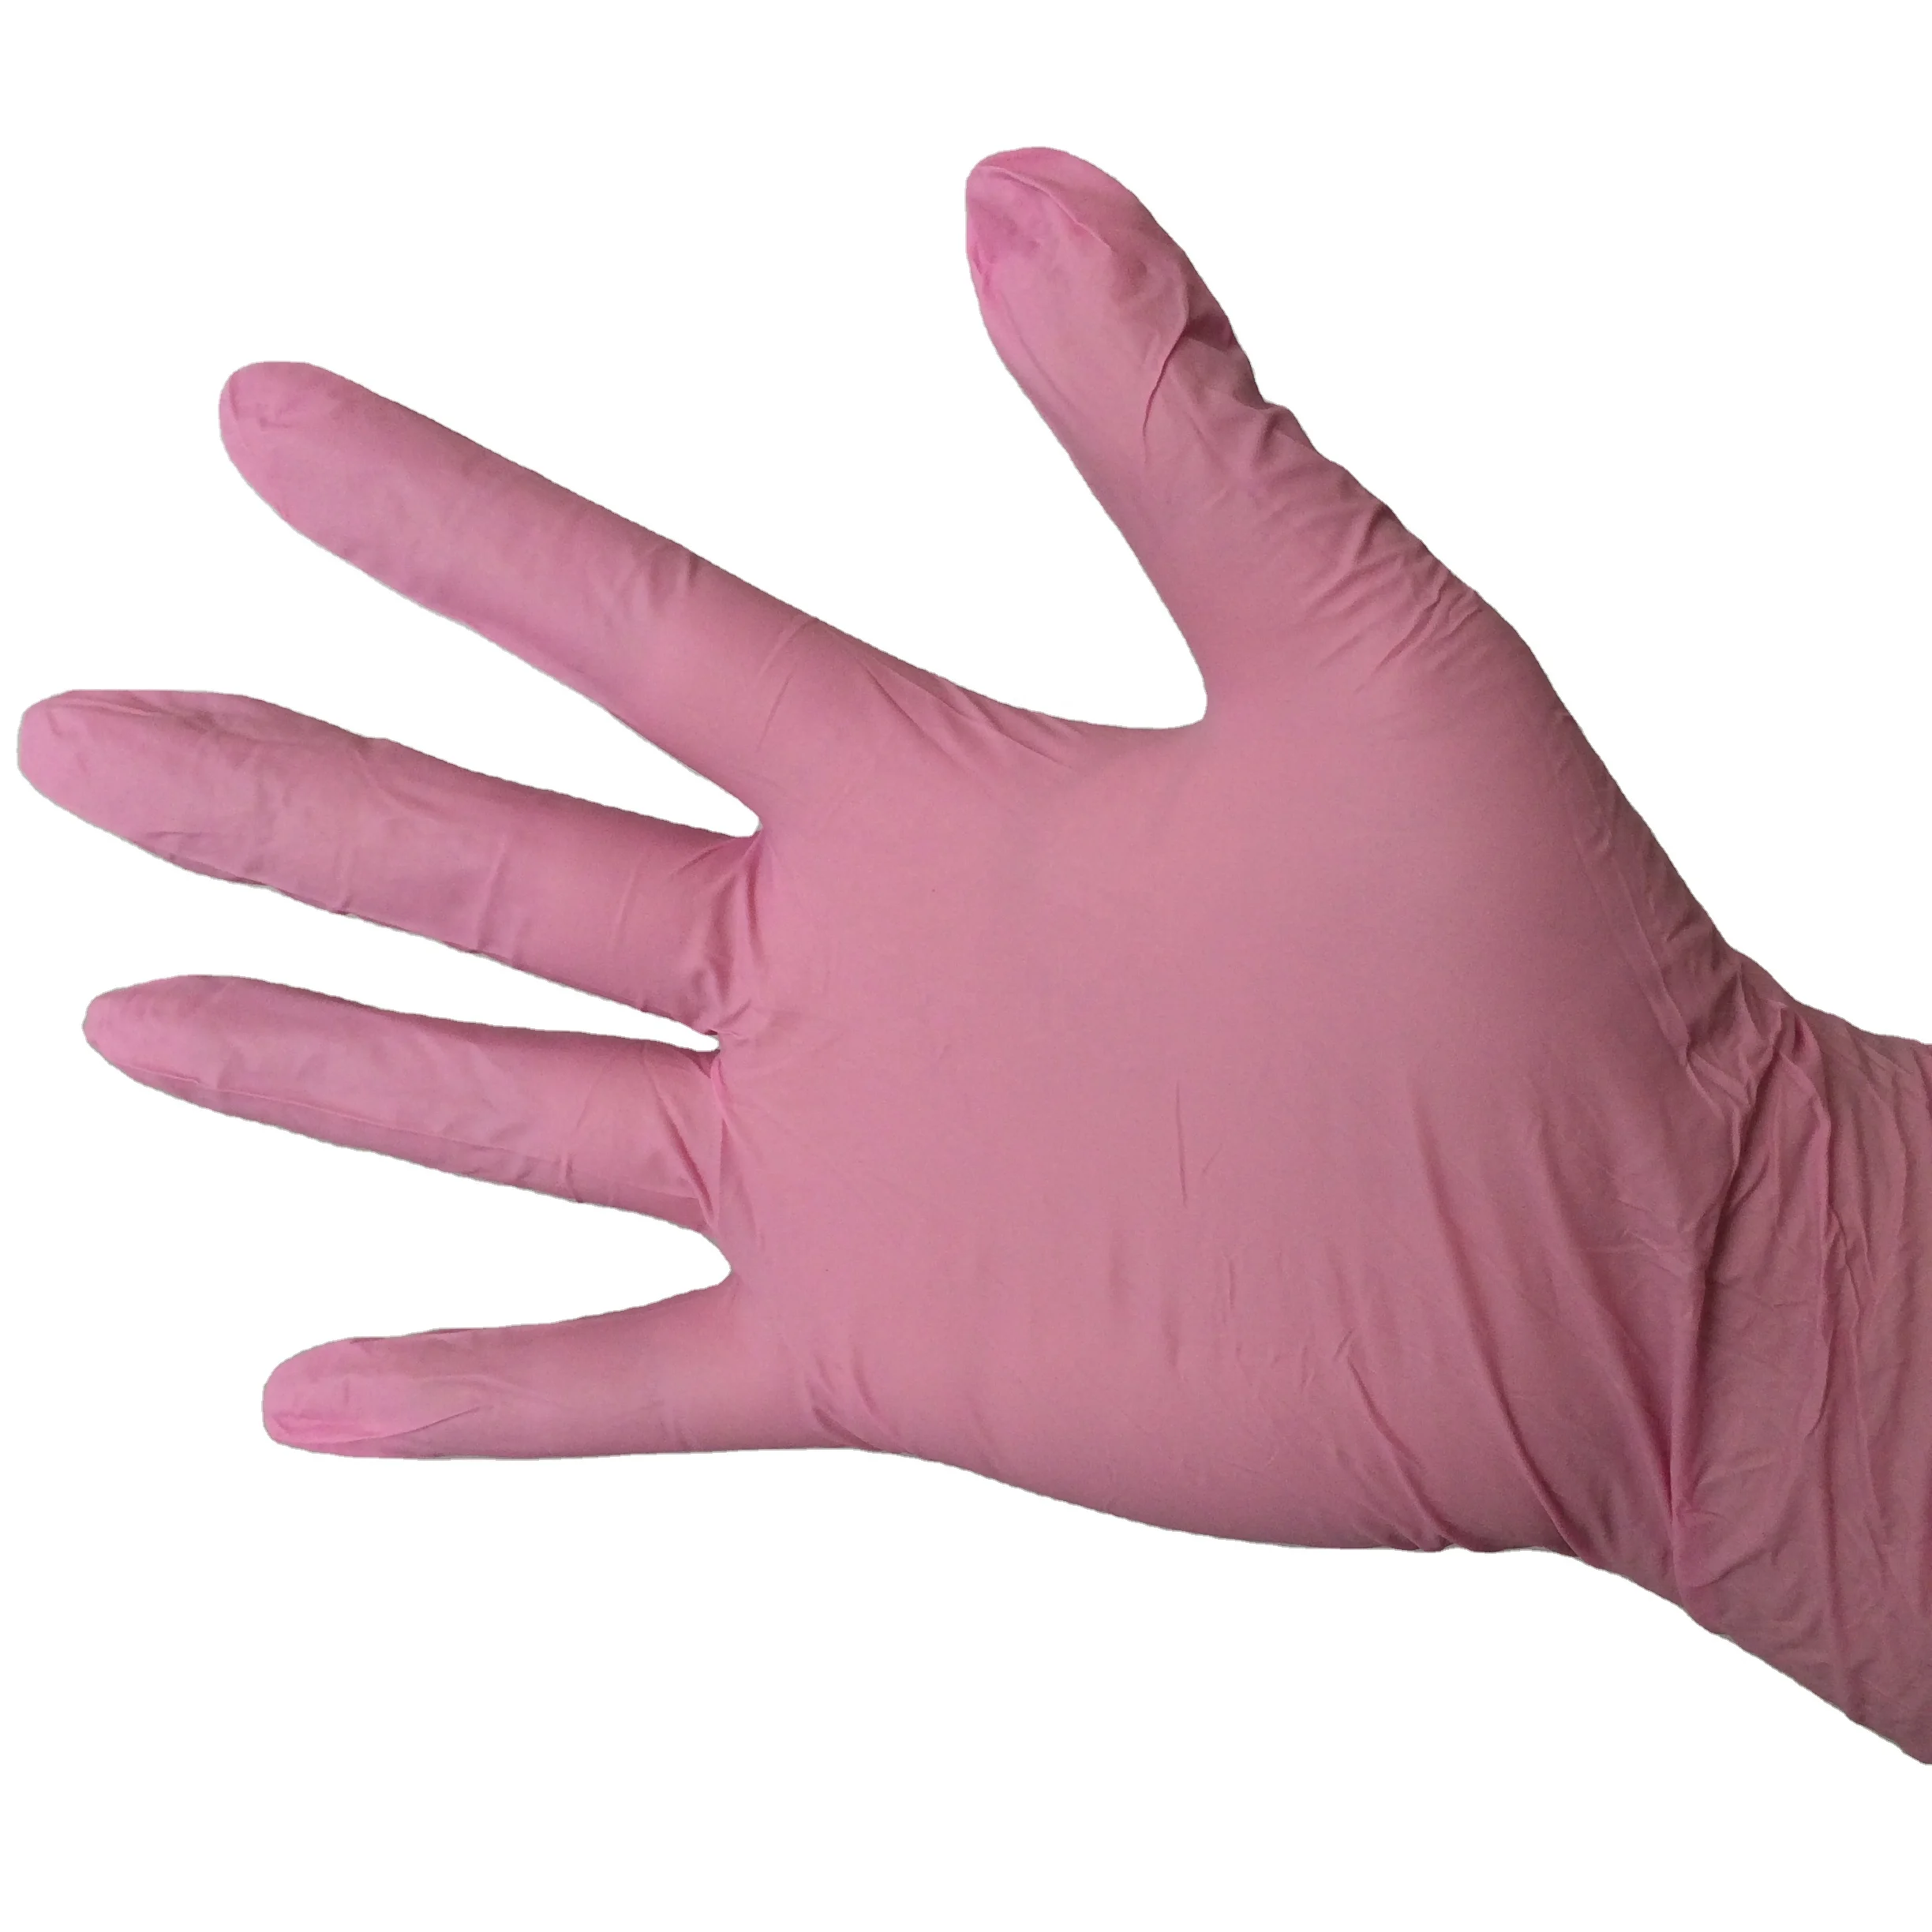 
Colorful Nitrile Dental Examination Gloves Powder Free  (60809289530)